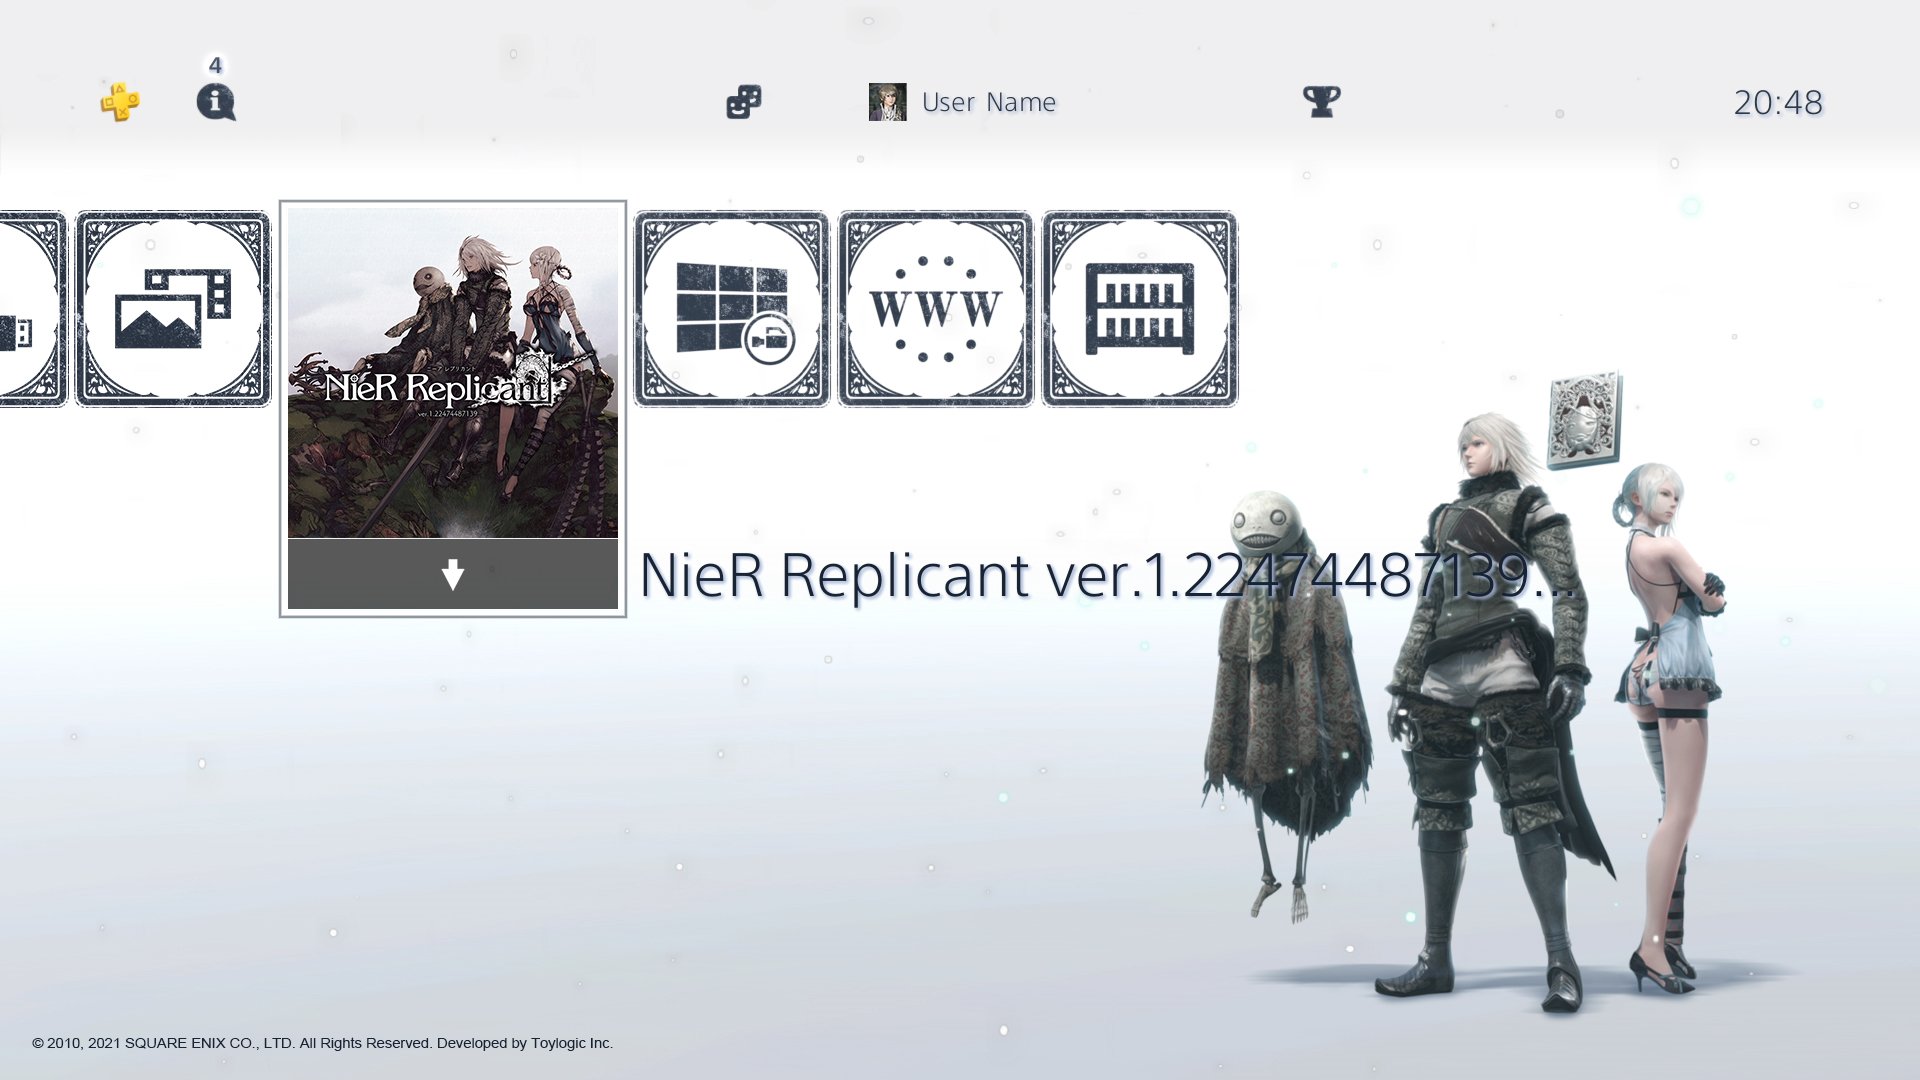 NieR Replicant ver.1.22474487139 - PS4, PlayStation 4